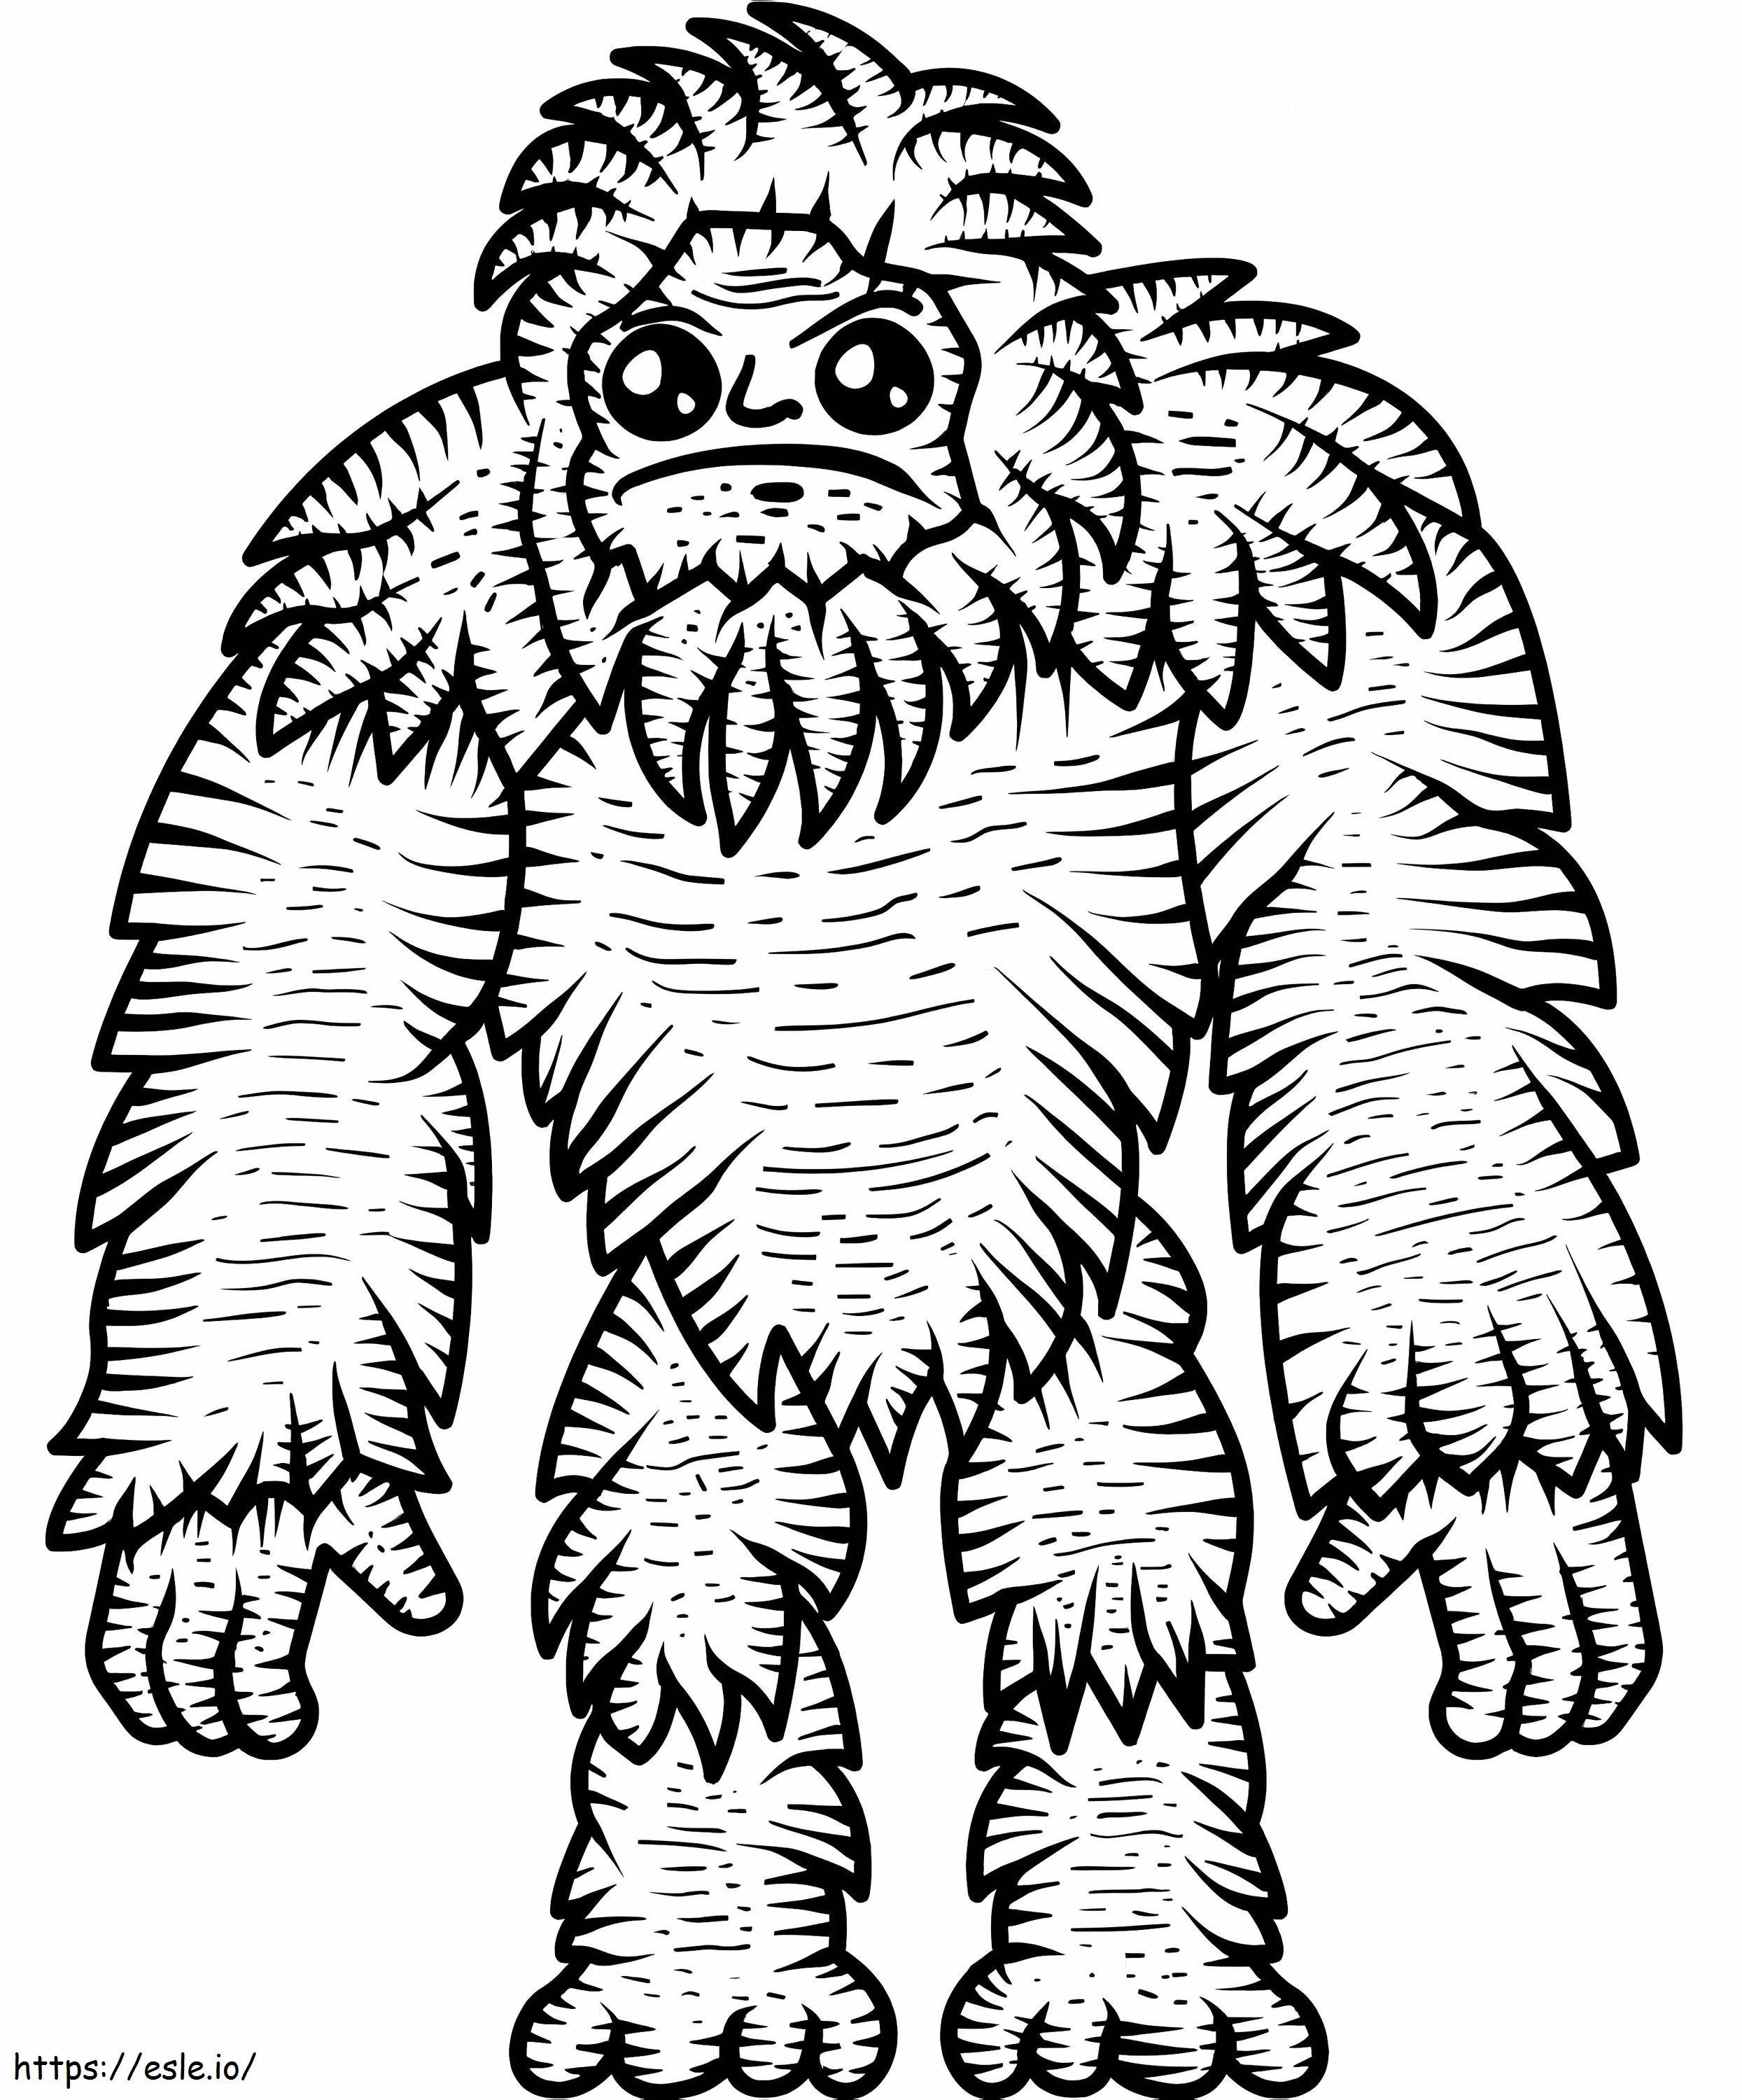 Cute Bigfoot coloring page